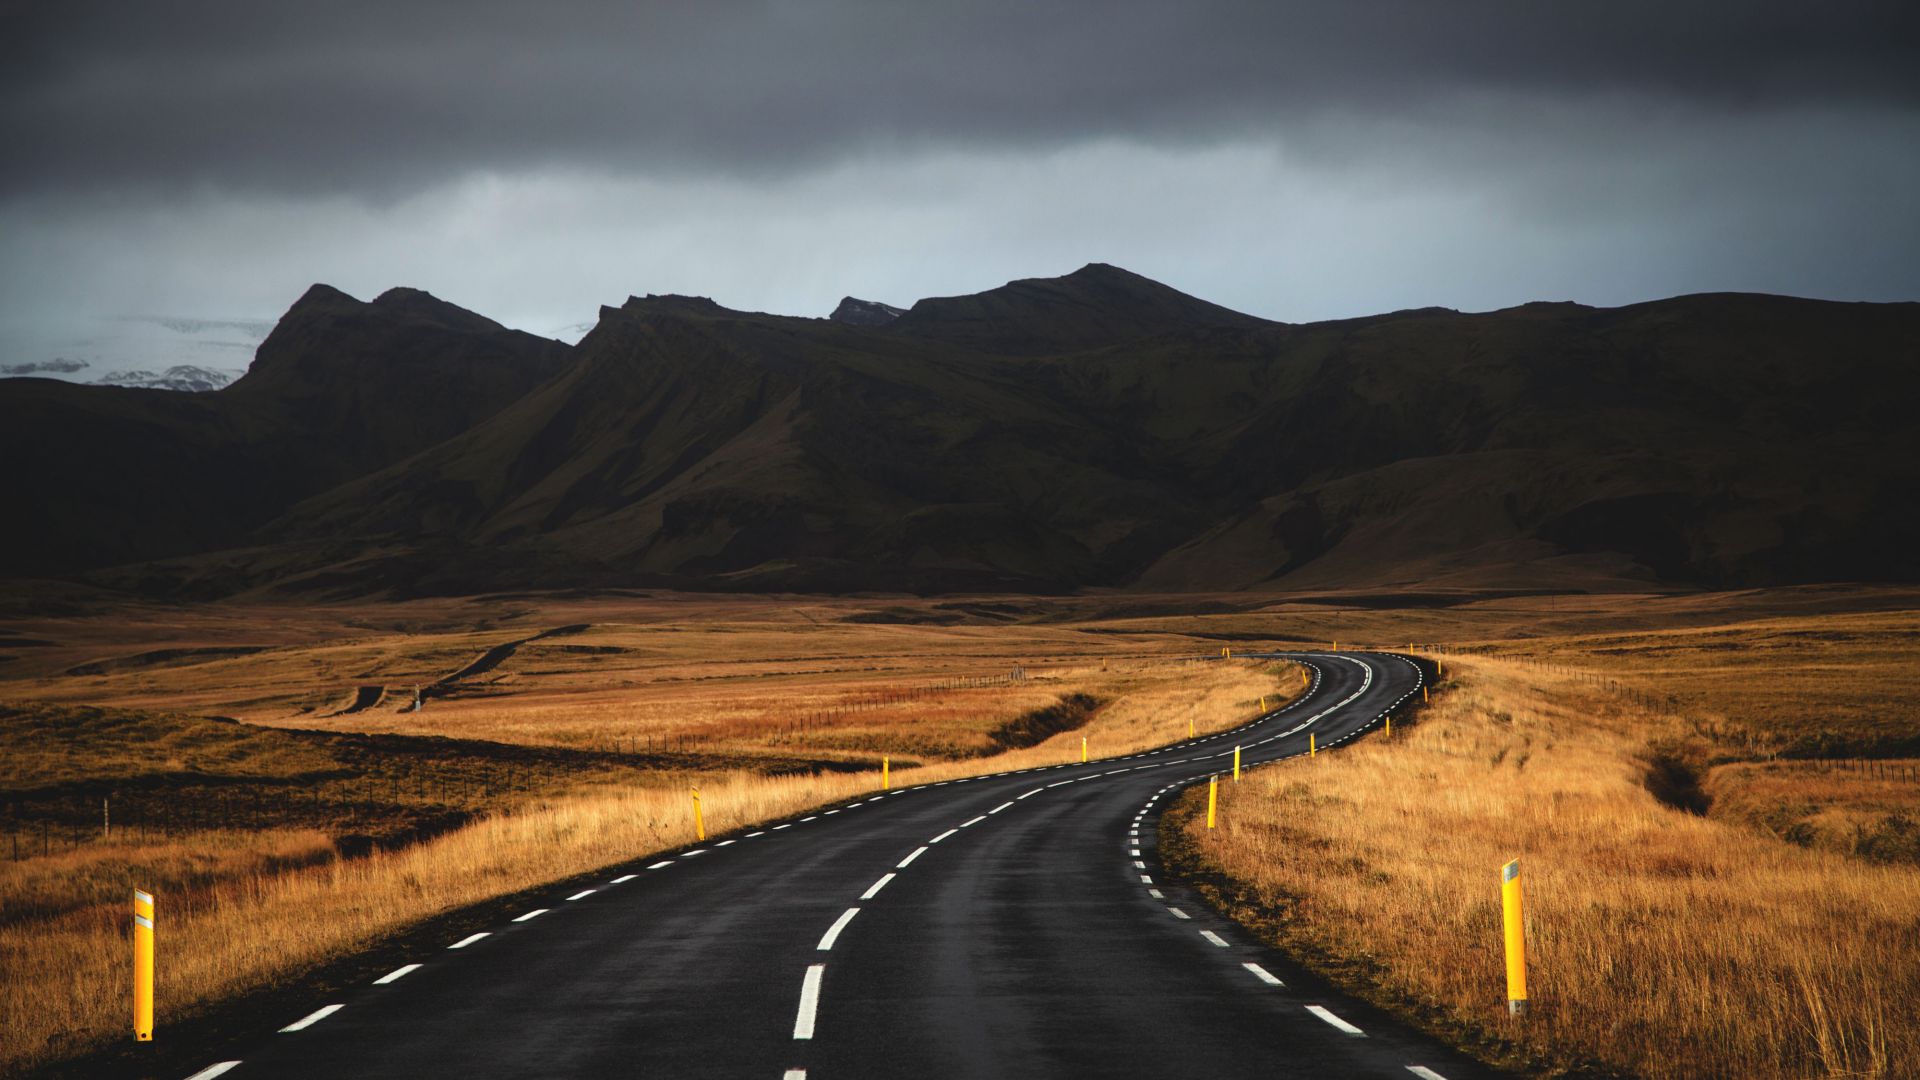 Iceland, 4k, 5k wallpaper, road, mountains, clouds (horizontal)